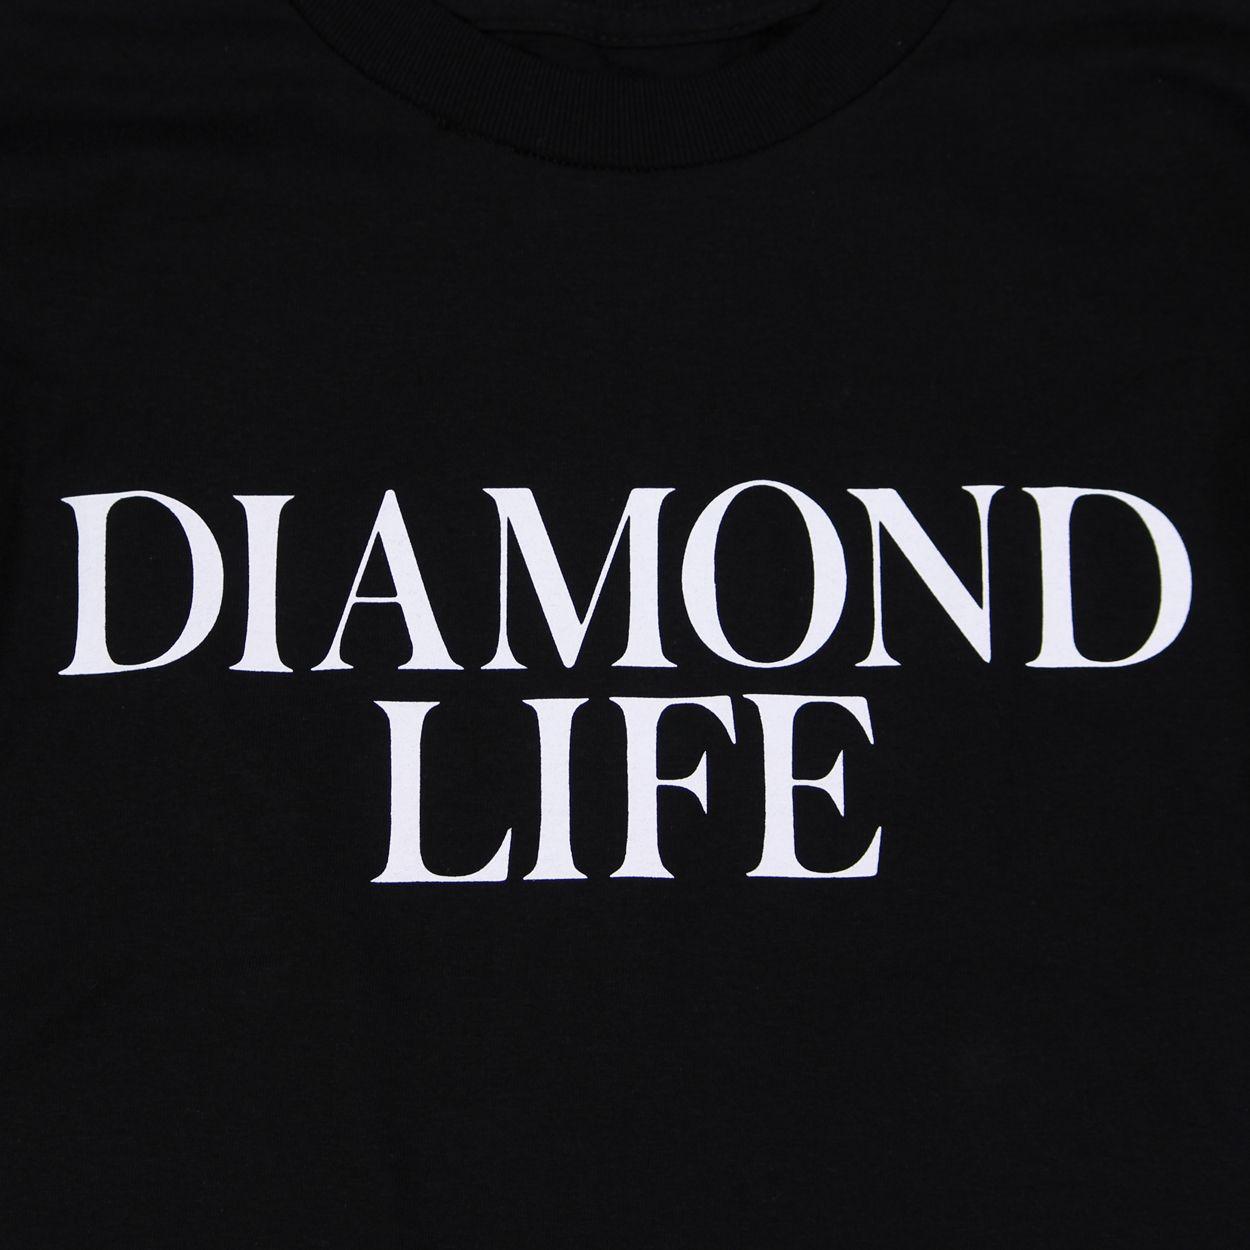 Diamond Sign for Life Logo - Diamond Supply Co. Mens Skateboarding Life Cotton Tee Black £25.50